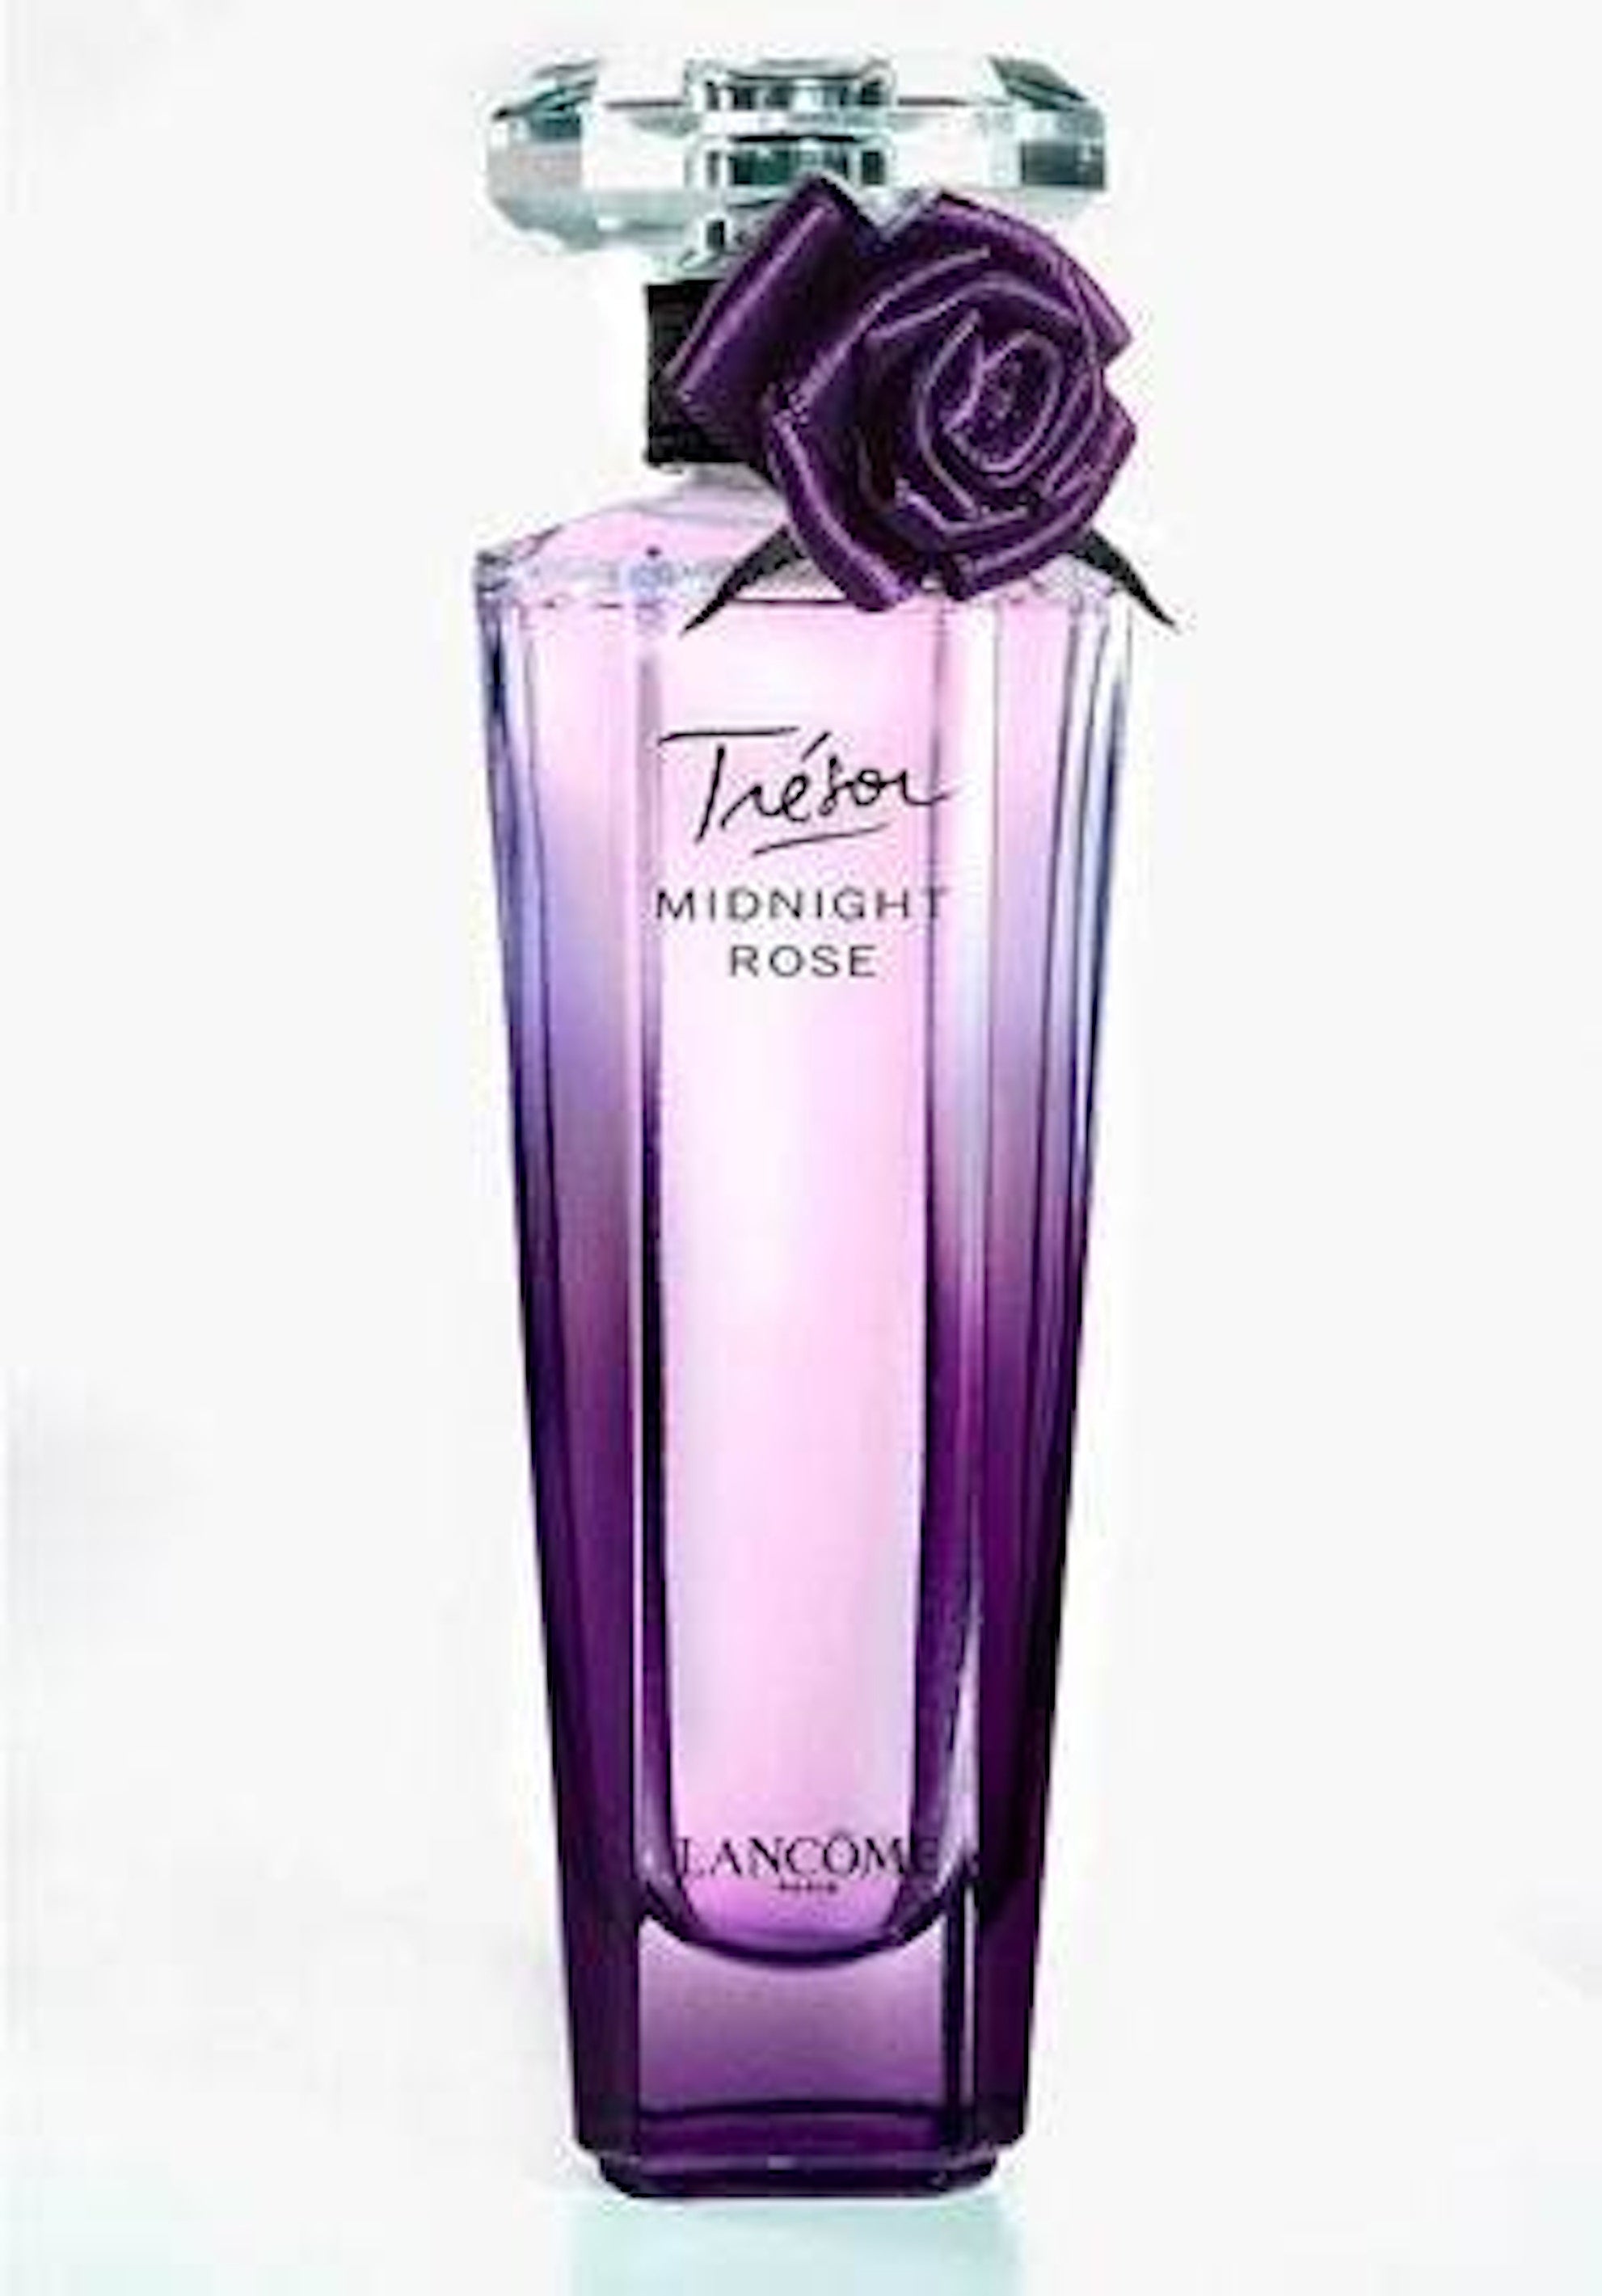 Lancome Tresor Midnight Rose Eau de Parfum 30ml Spray - Peacock Bazaar